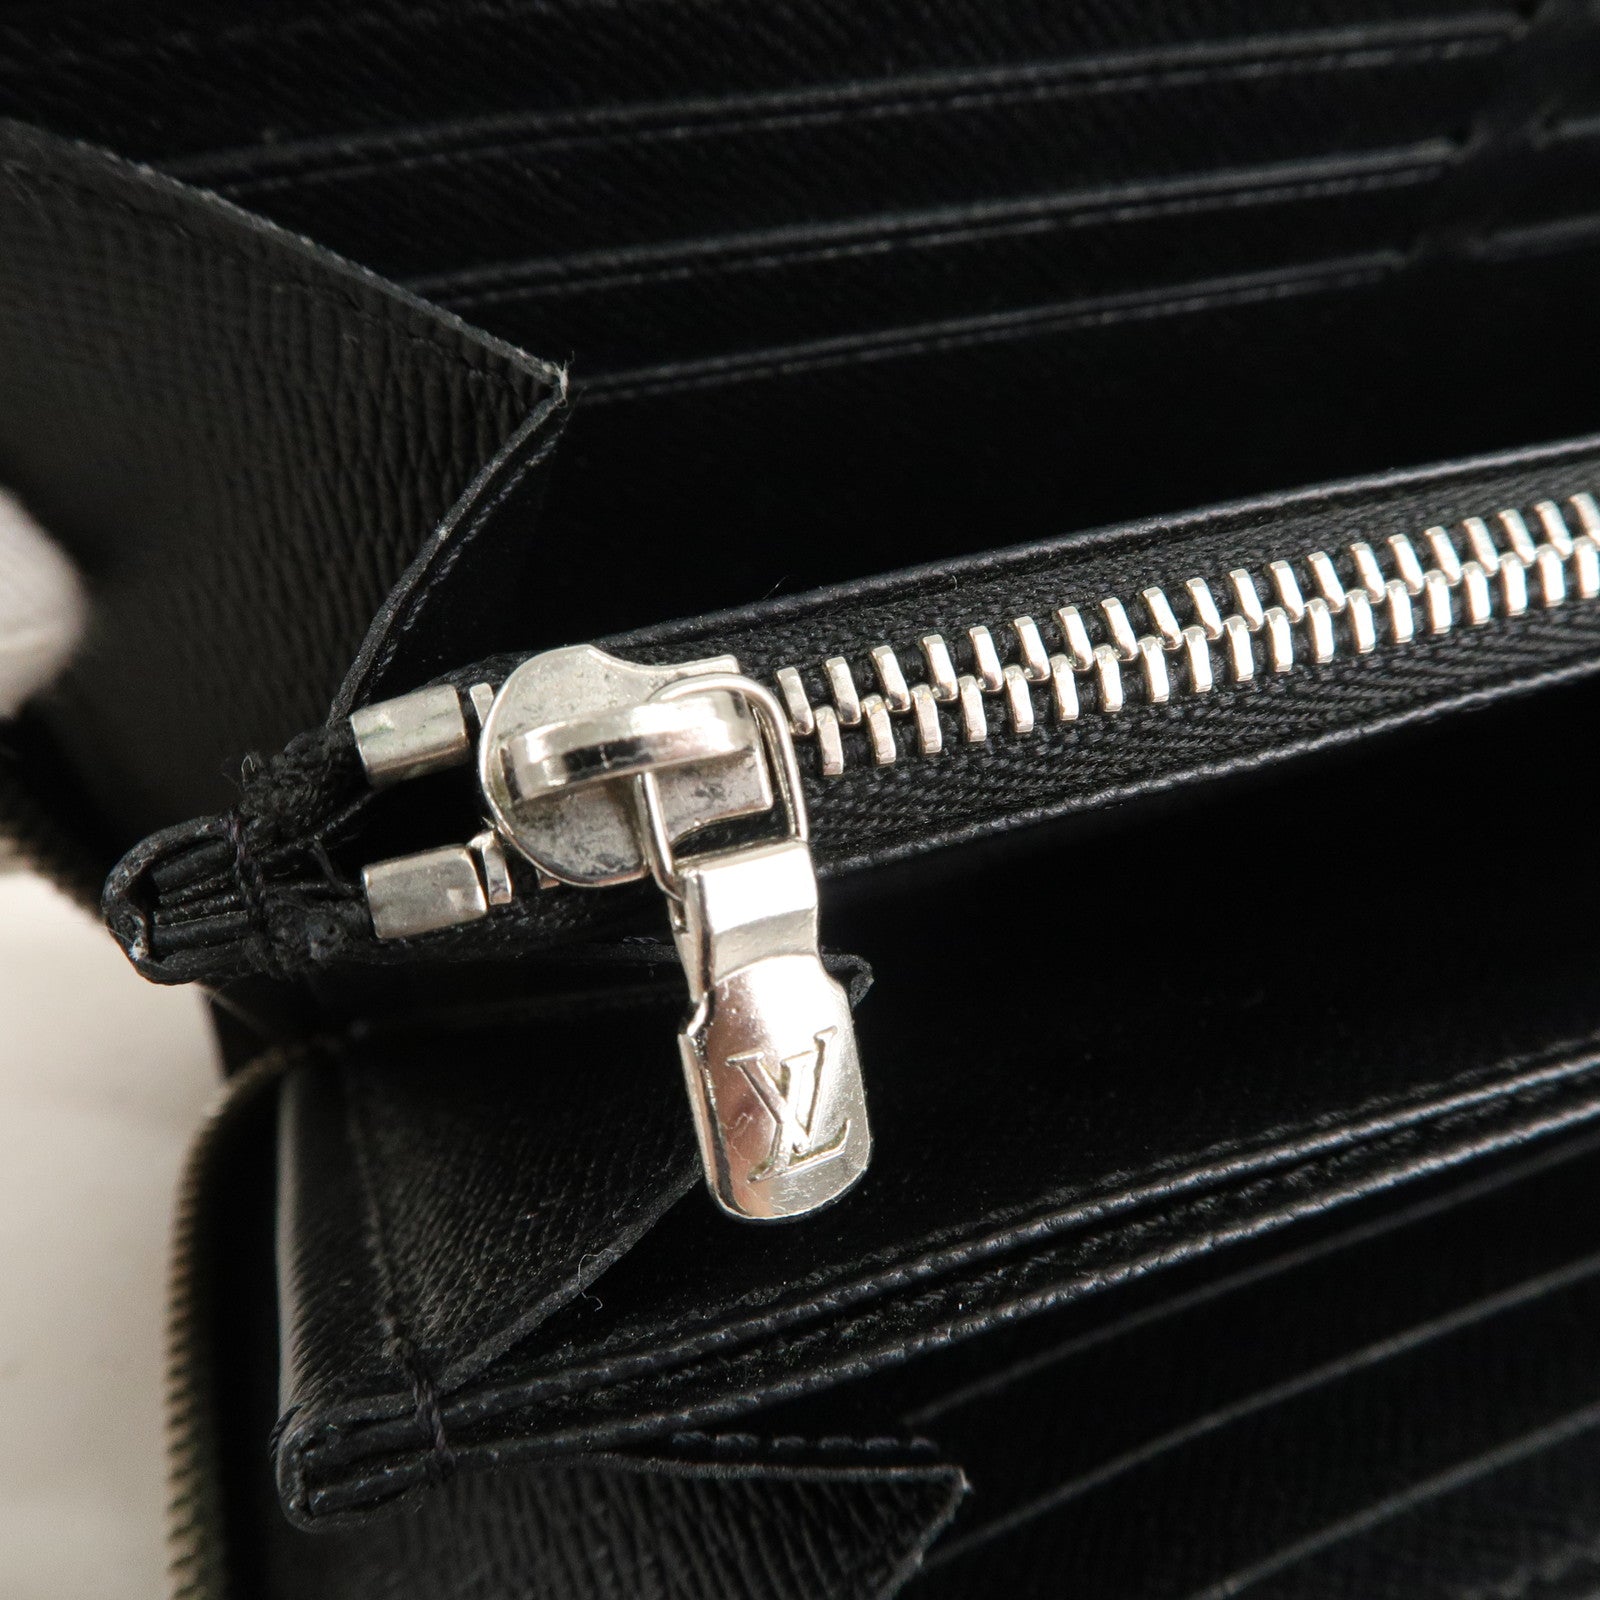 Louis-Vuitton-Epi-Zippy-Wallet-Zip-Round-Long-Wallet-Black-M61857